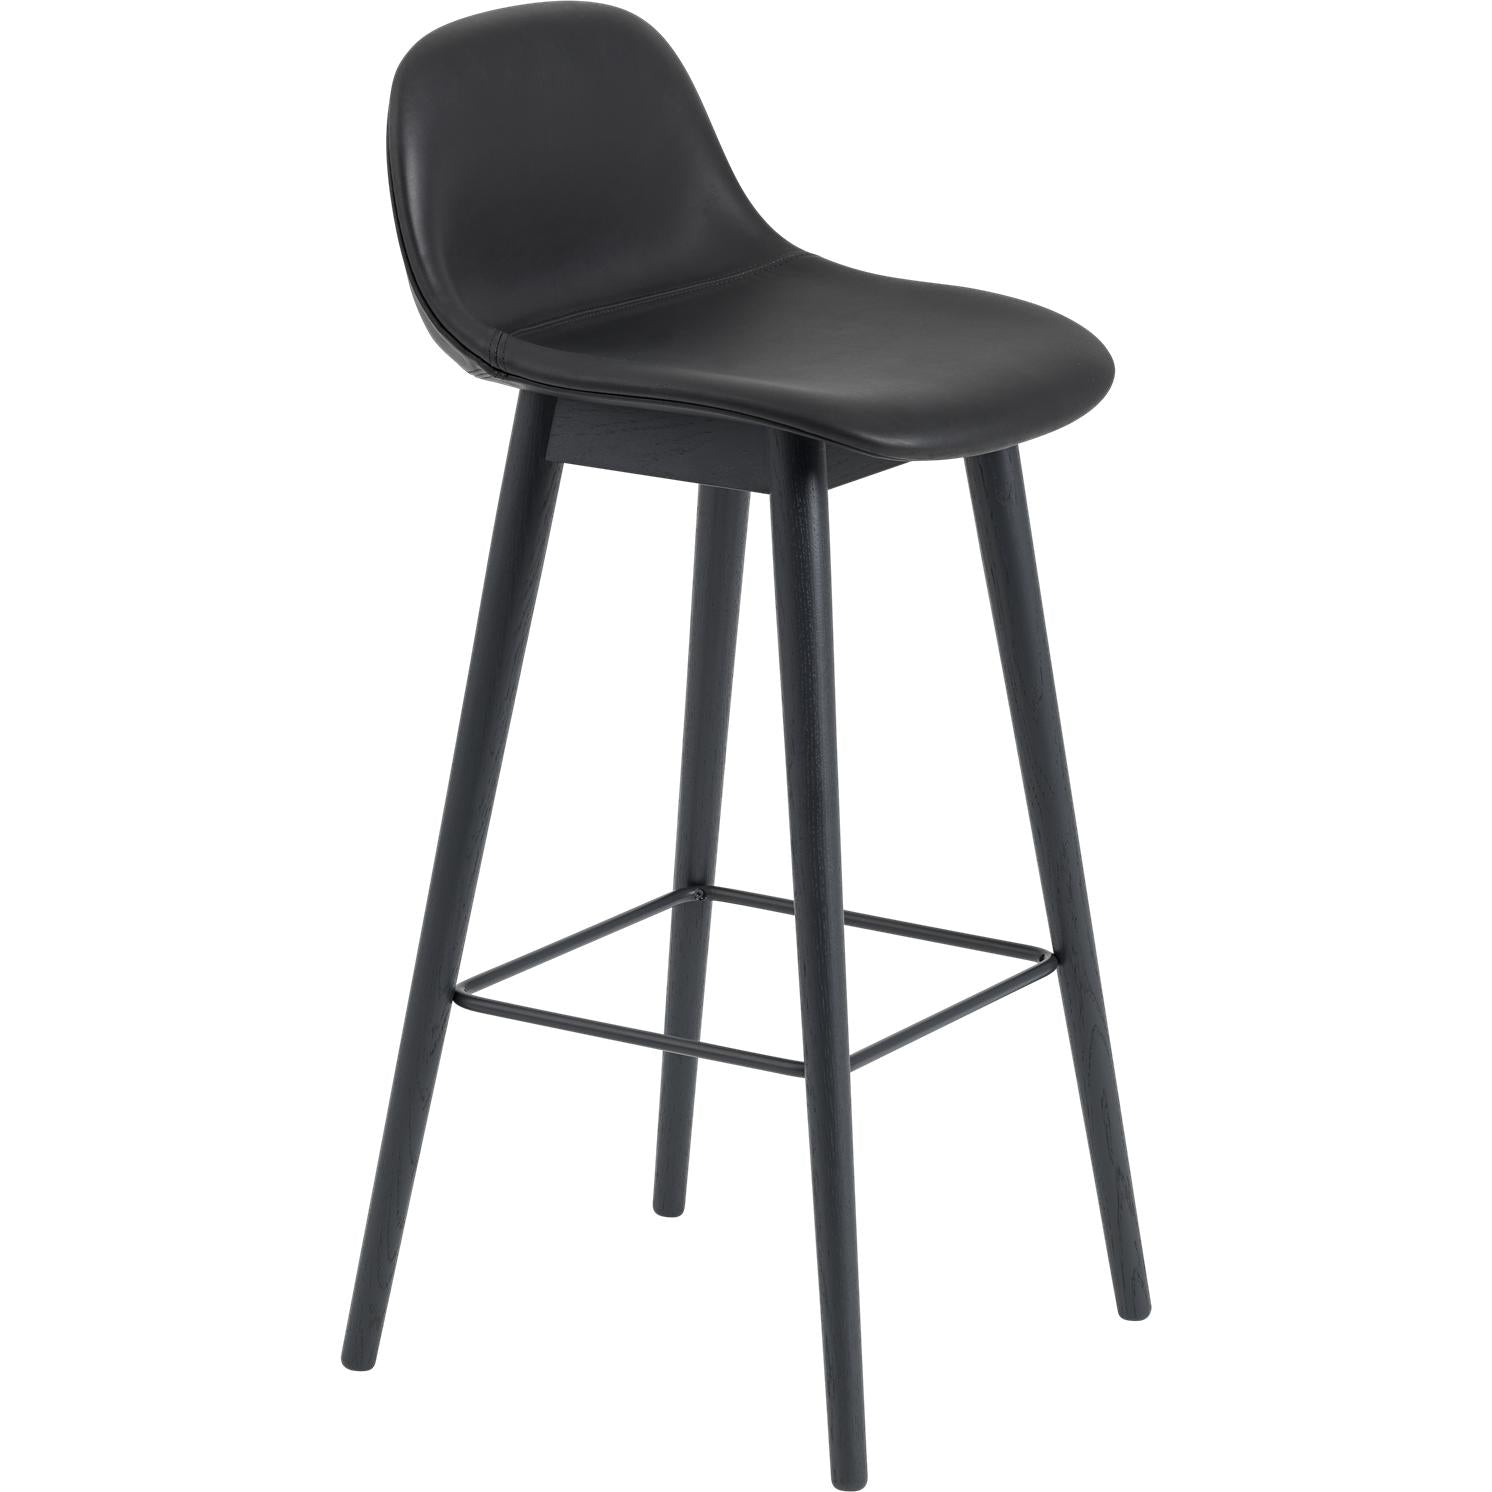 Muuto Fiber Bar Chair With Backrest Wooden Legs, Fiber/Leather Seat, Black Refine Leather